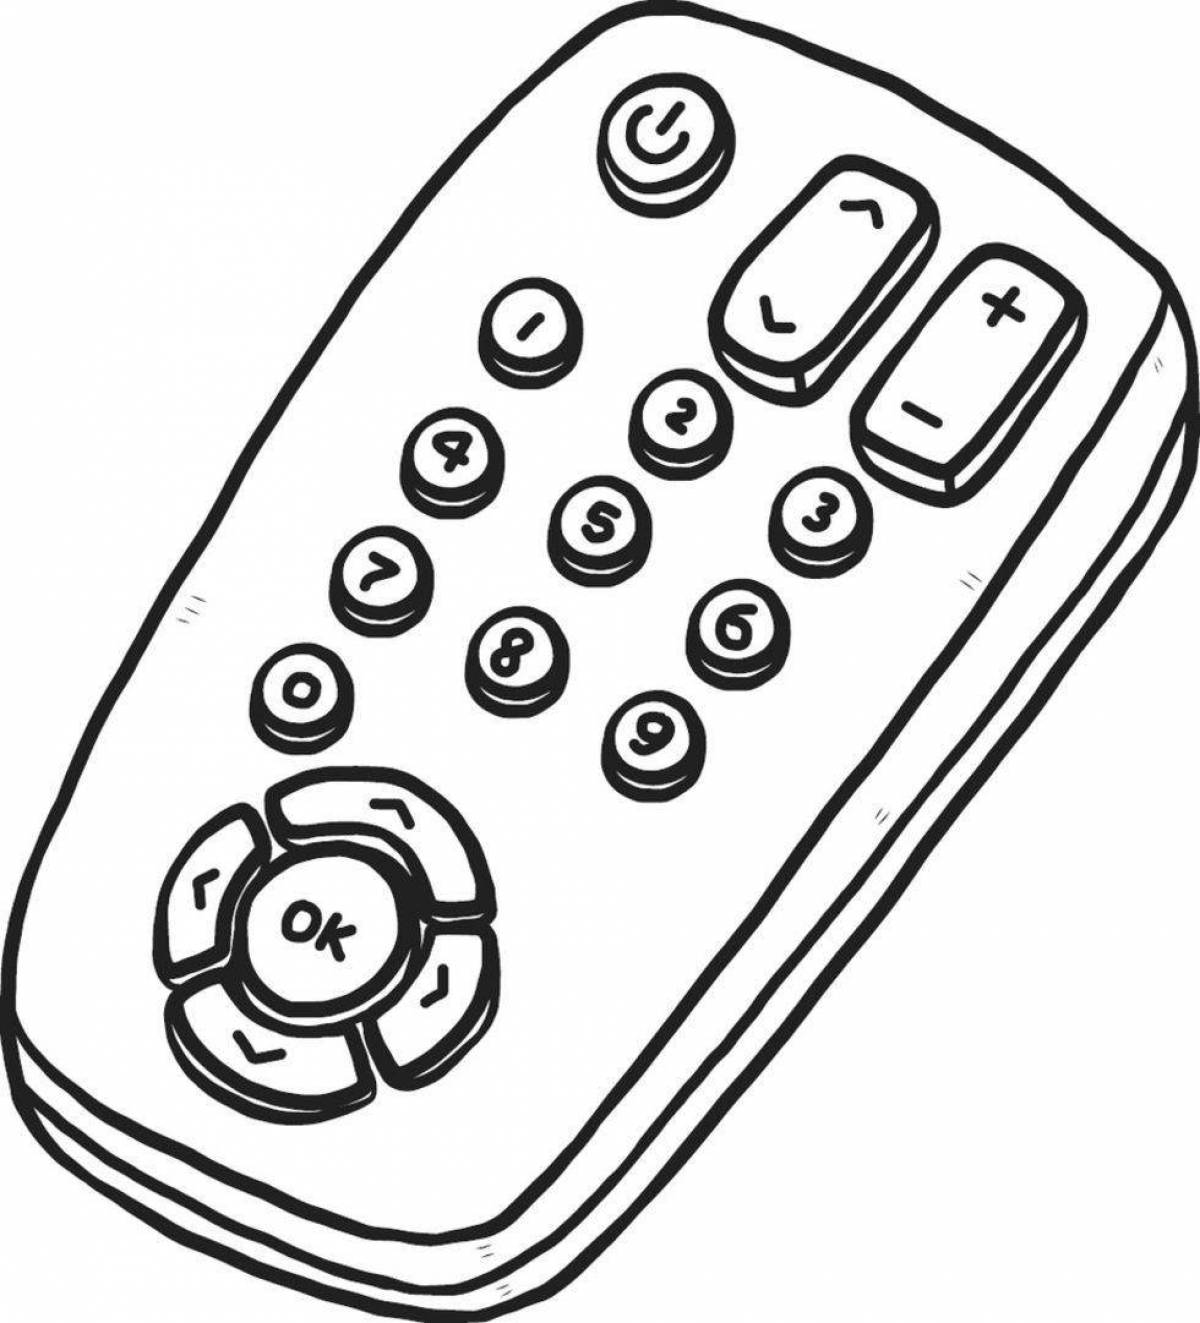 Fun remote control coloring page